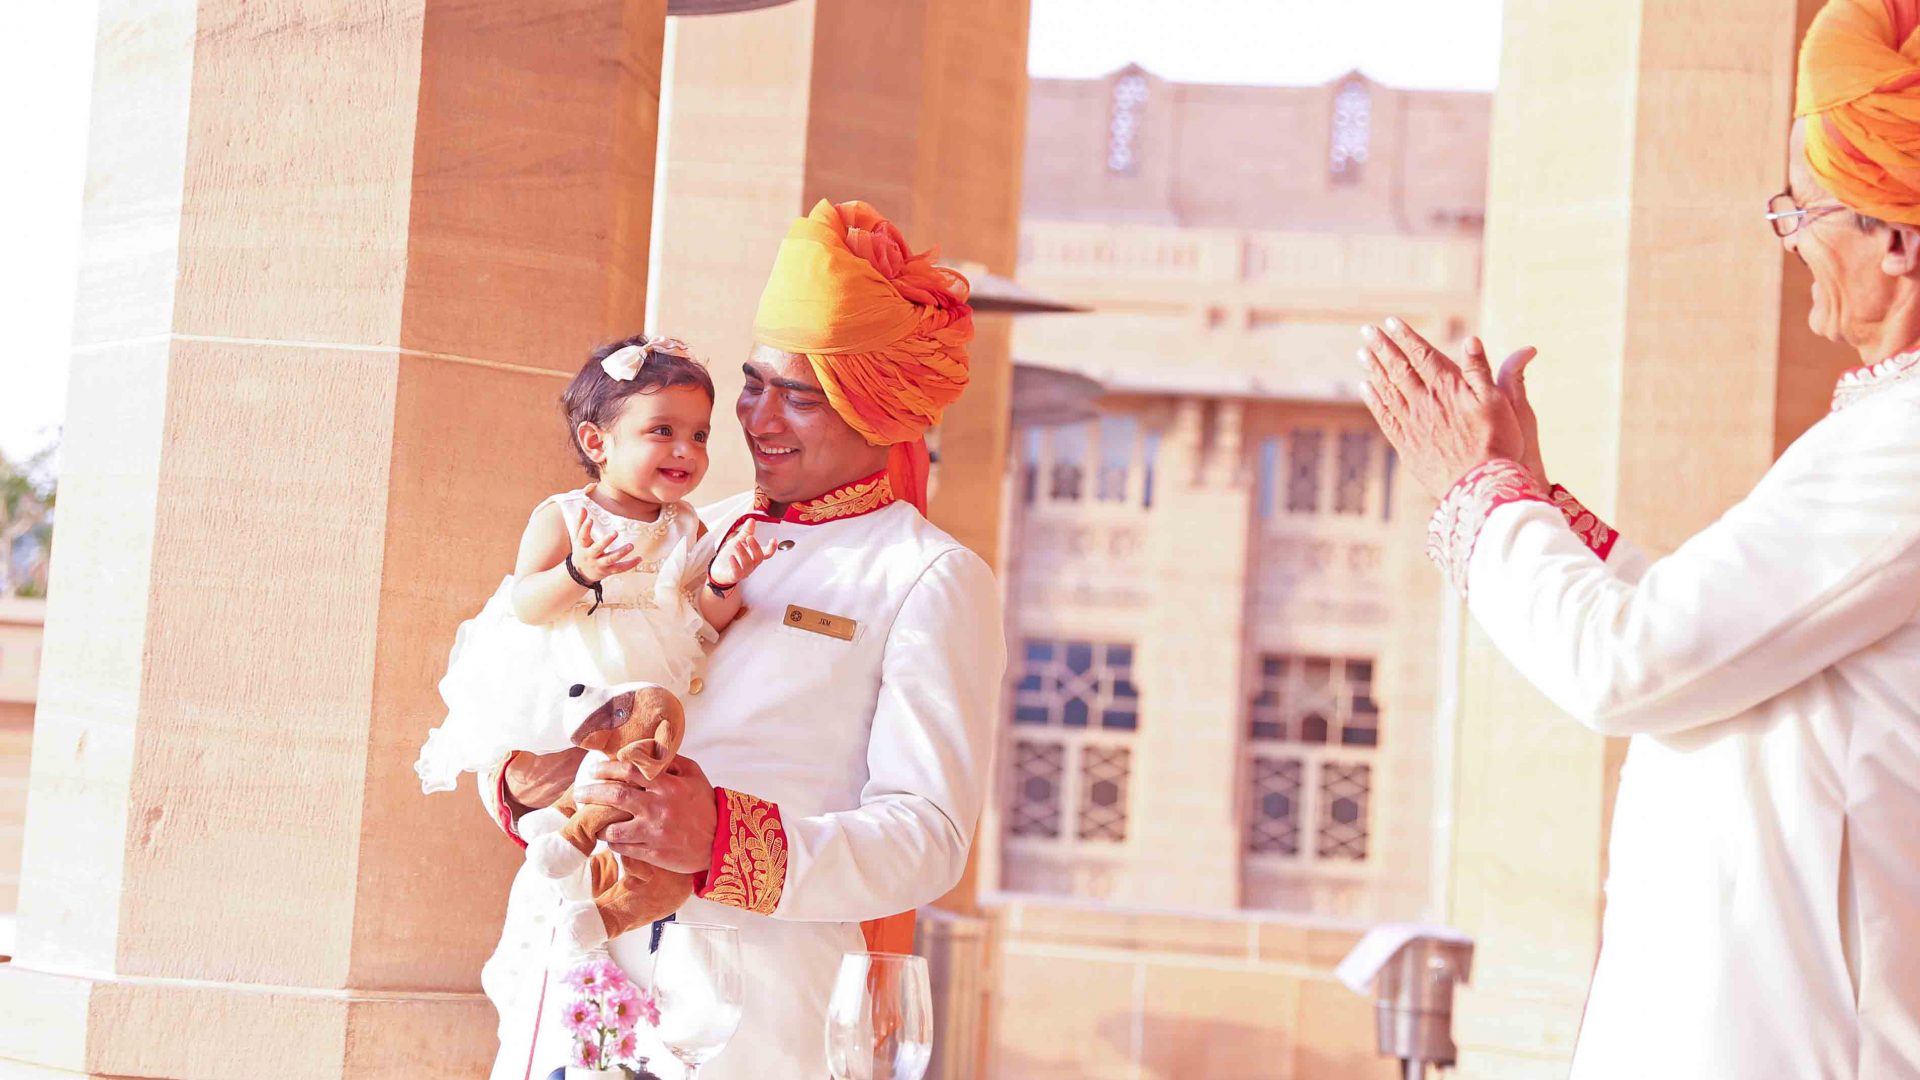 Baby Gia Sereni making friends in Jodhpur, India.